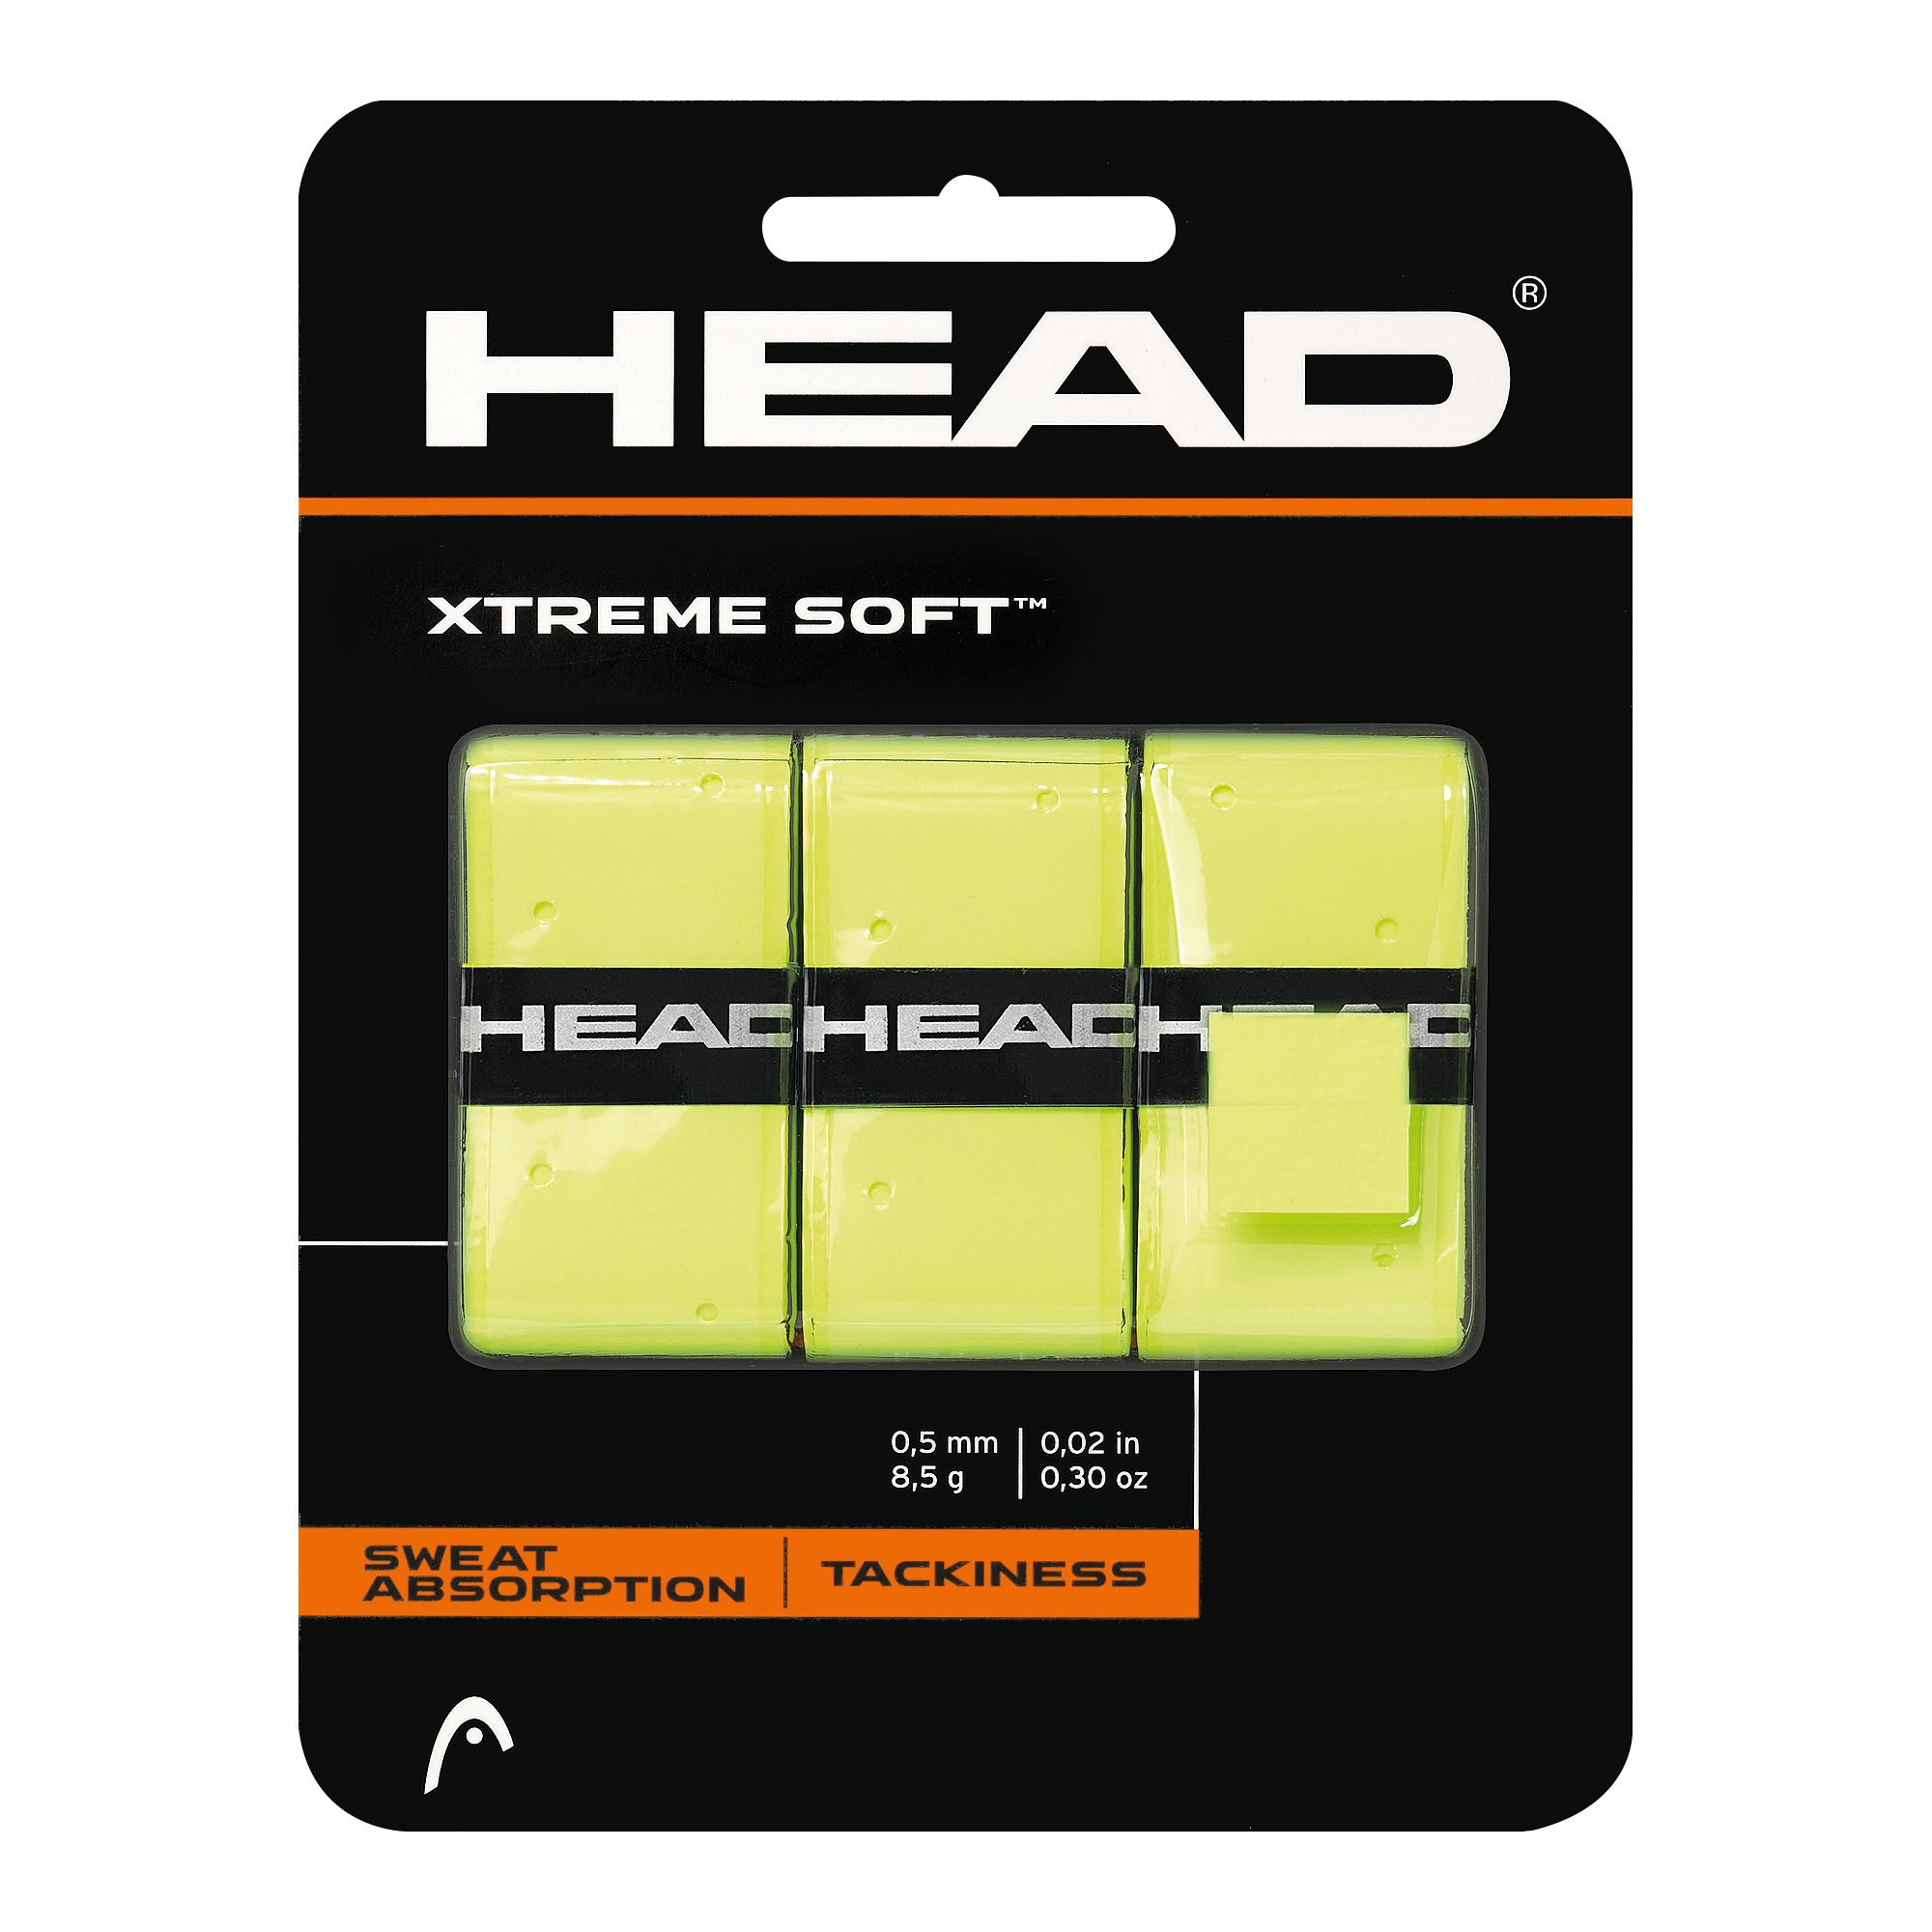 Benzi de prindere Extreme Soft Head La reduceri Accesorii